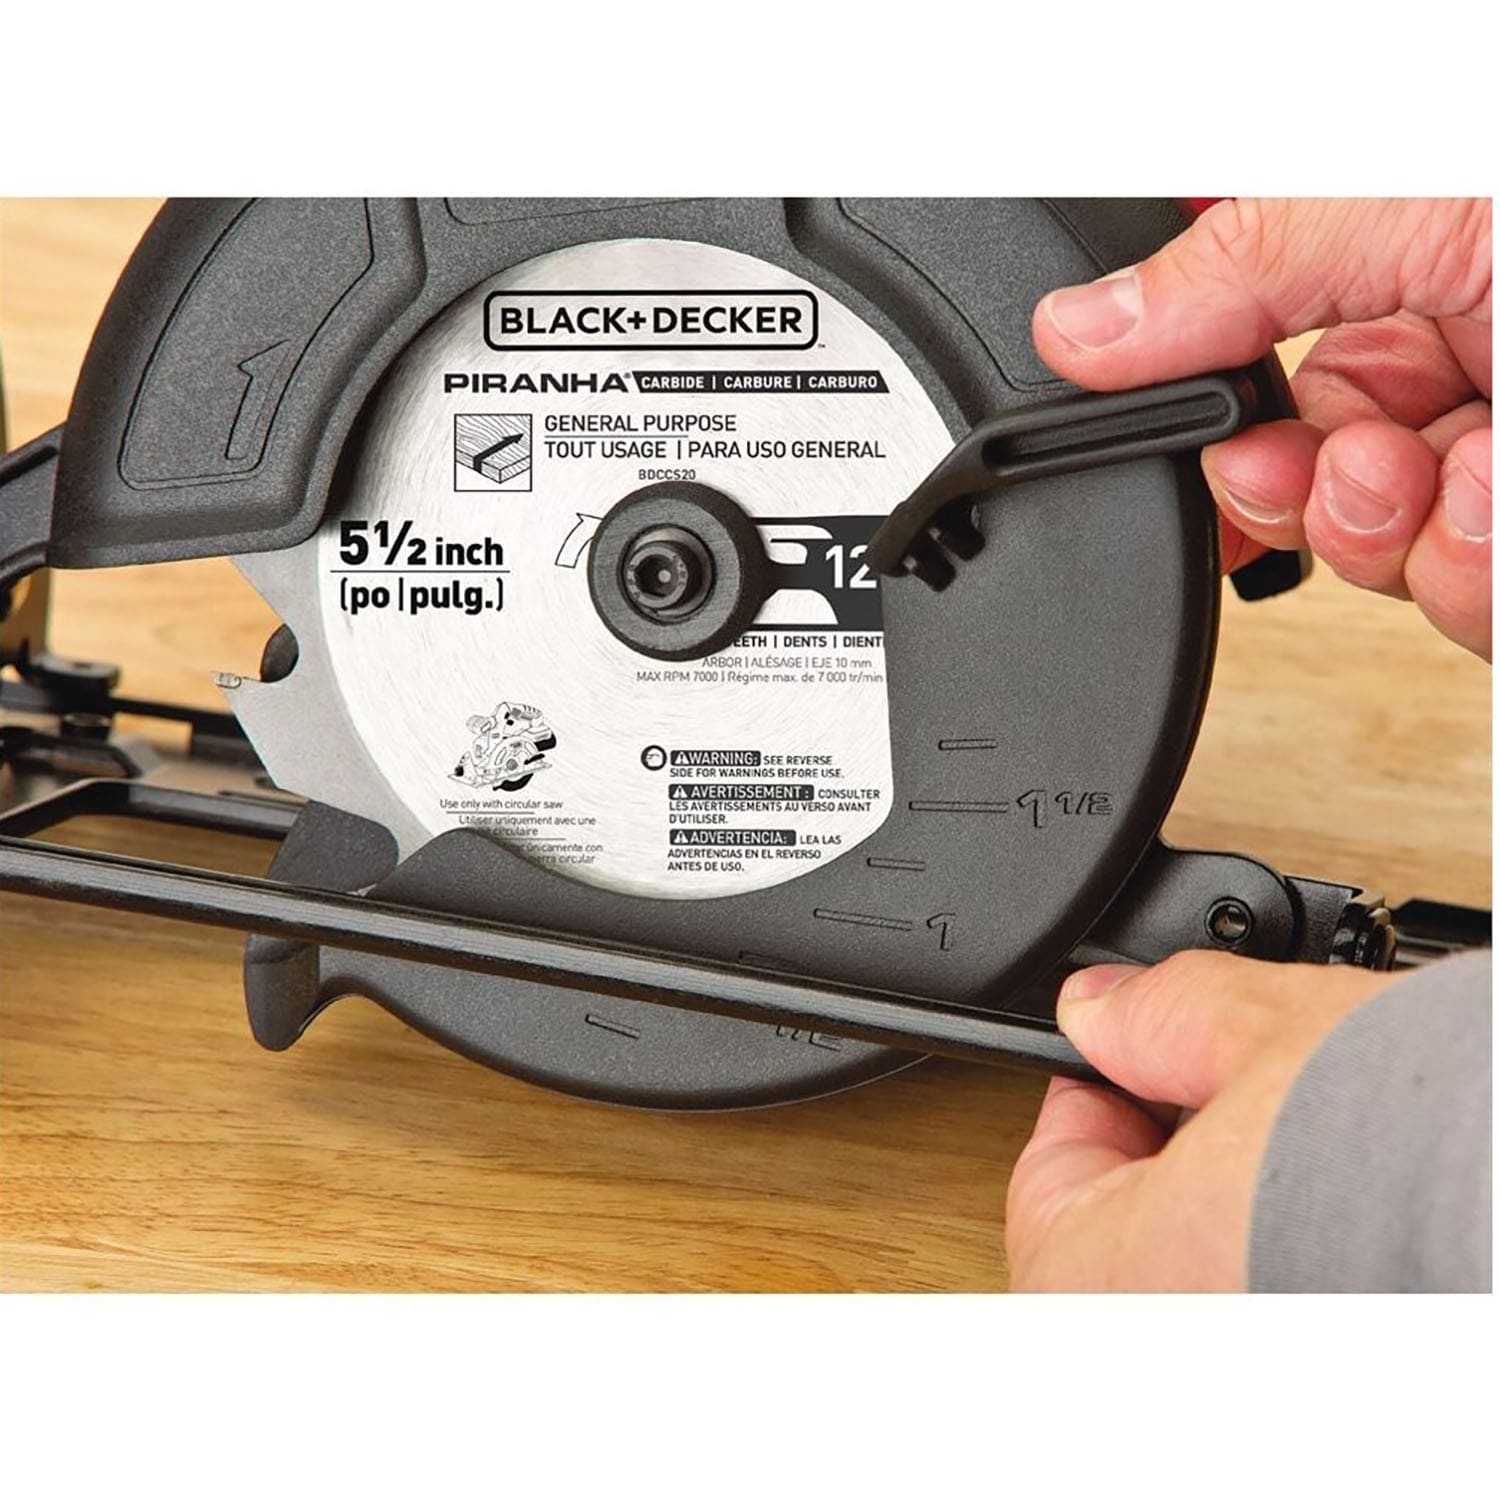 Black & Decker 20V Max PowerConnect Cordless Drill/Driver + Circular Saw Combo Kit